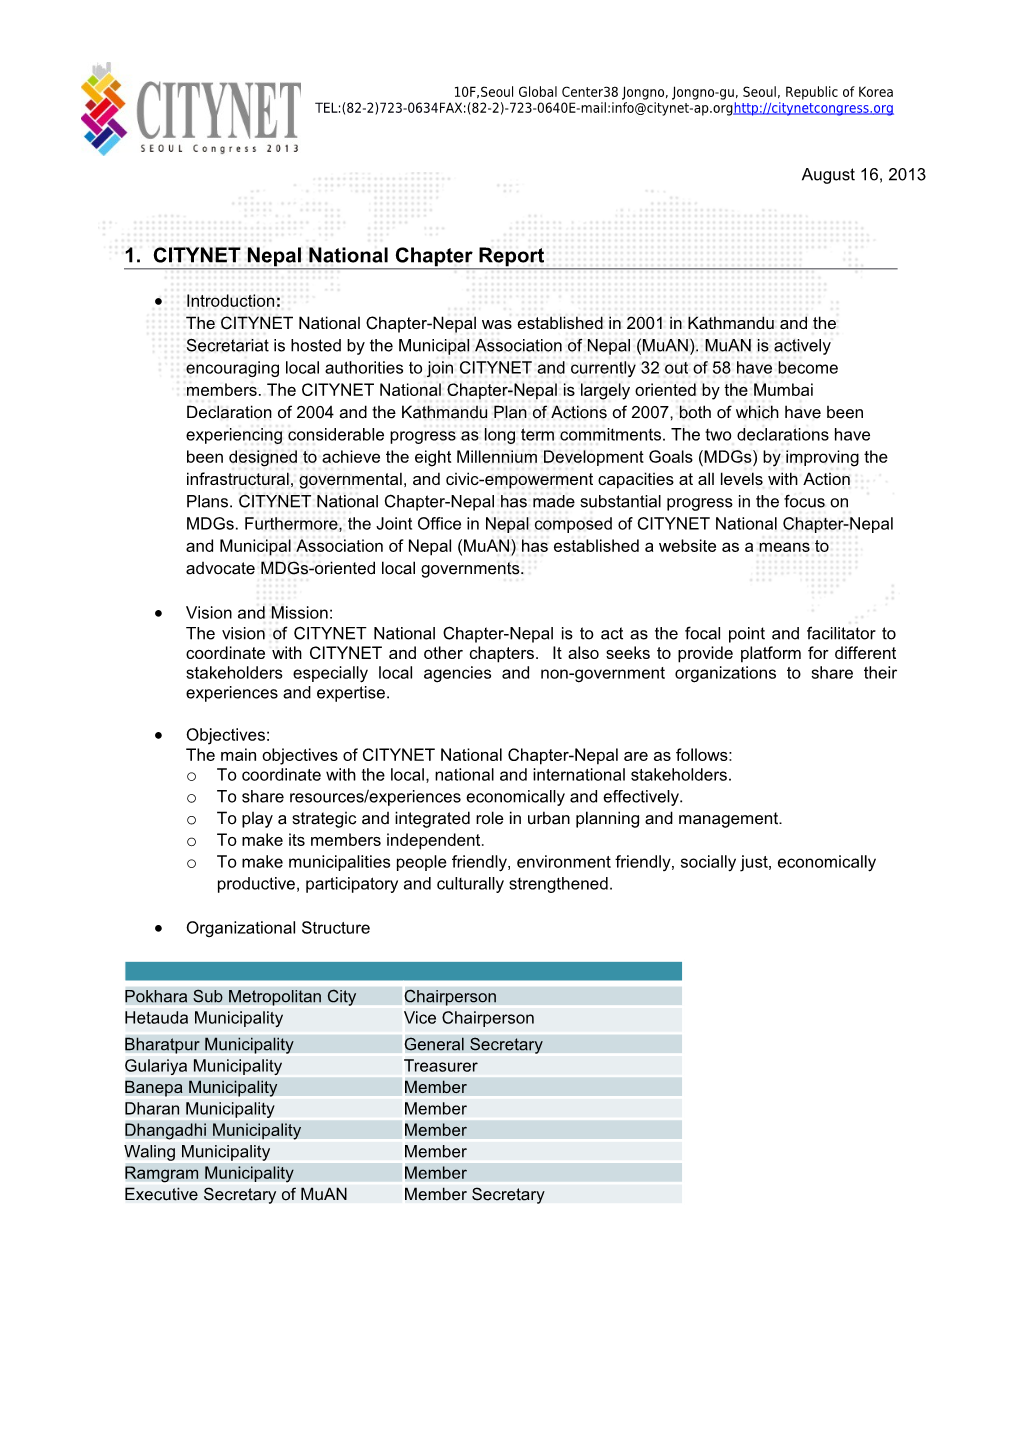 1. CITYNET Nepal National Chapter Report